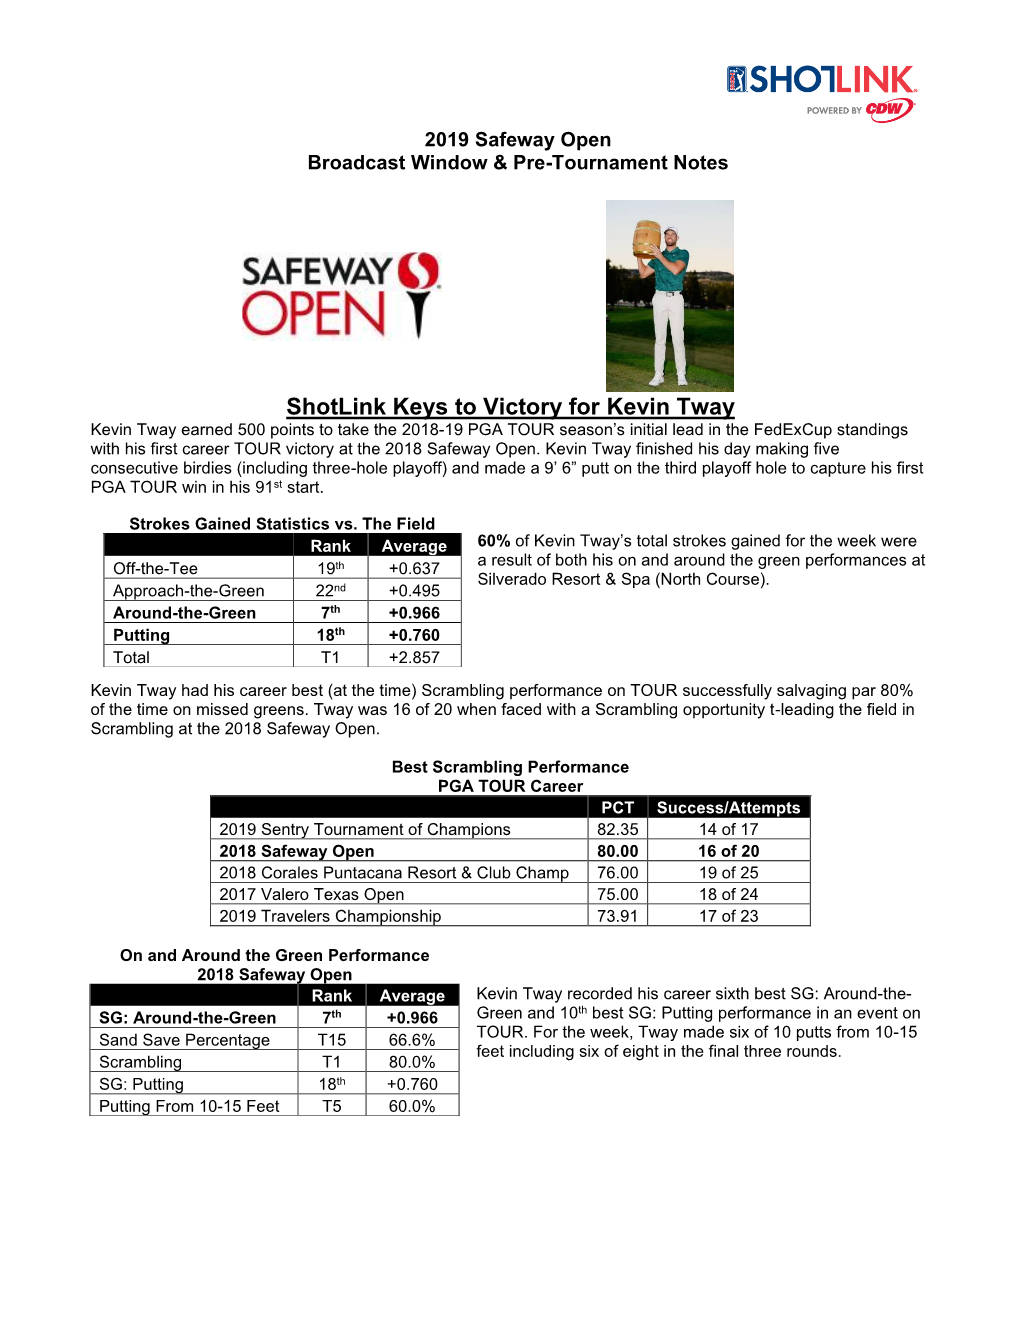 2019 Safeway Open Shotlink & Broadcast Notes